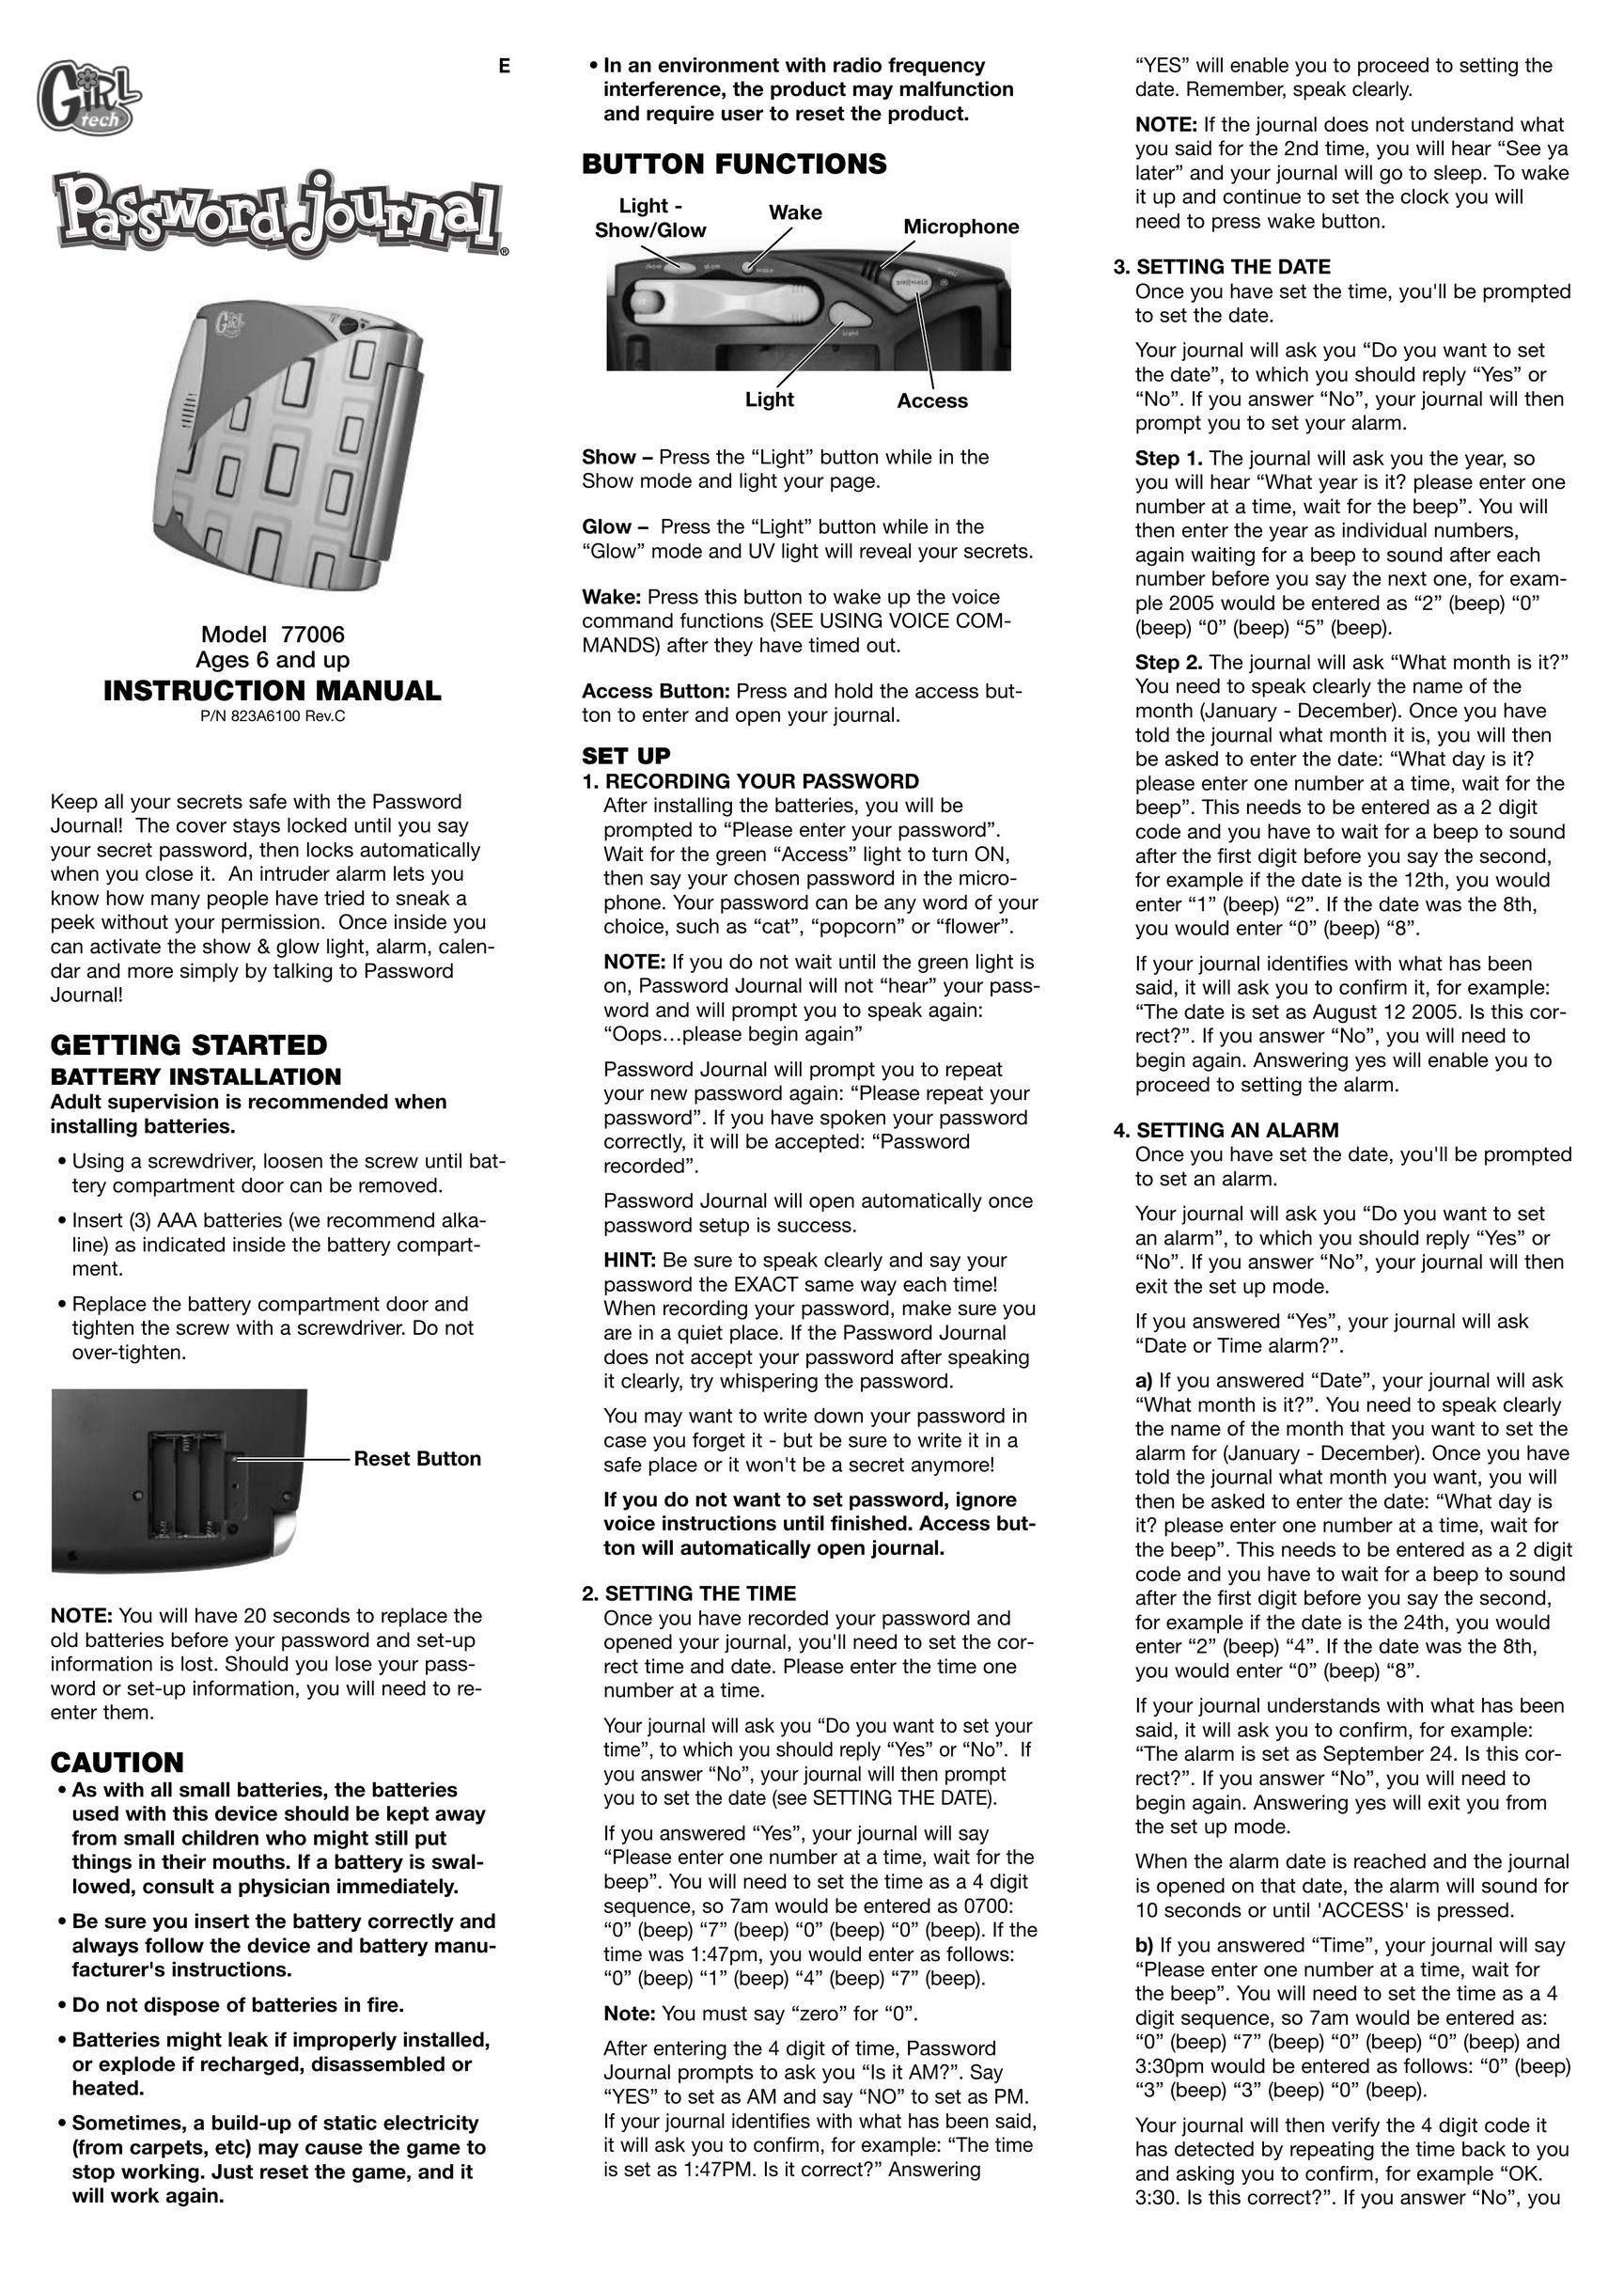 Radica Games 77006 Doll User Manual